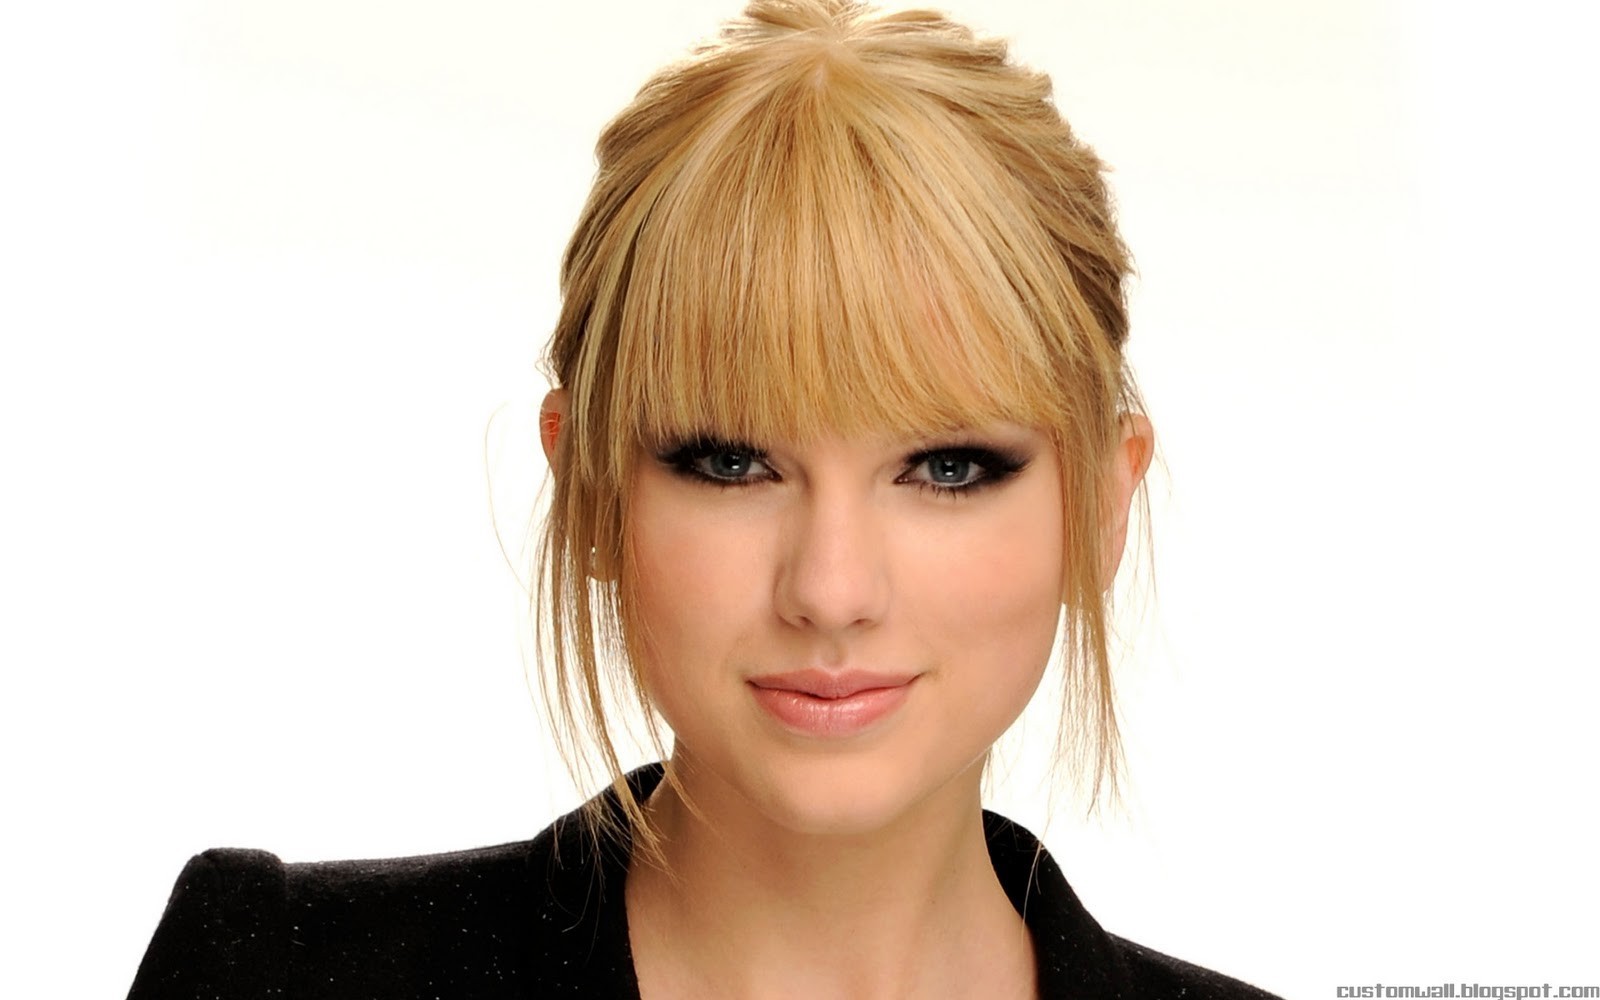 Women Taylor Swift Singer Blonde Smiling Looking At Viewer Face Smoky Eyes 1600x1000